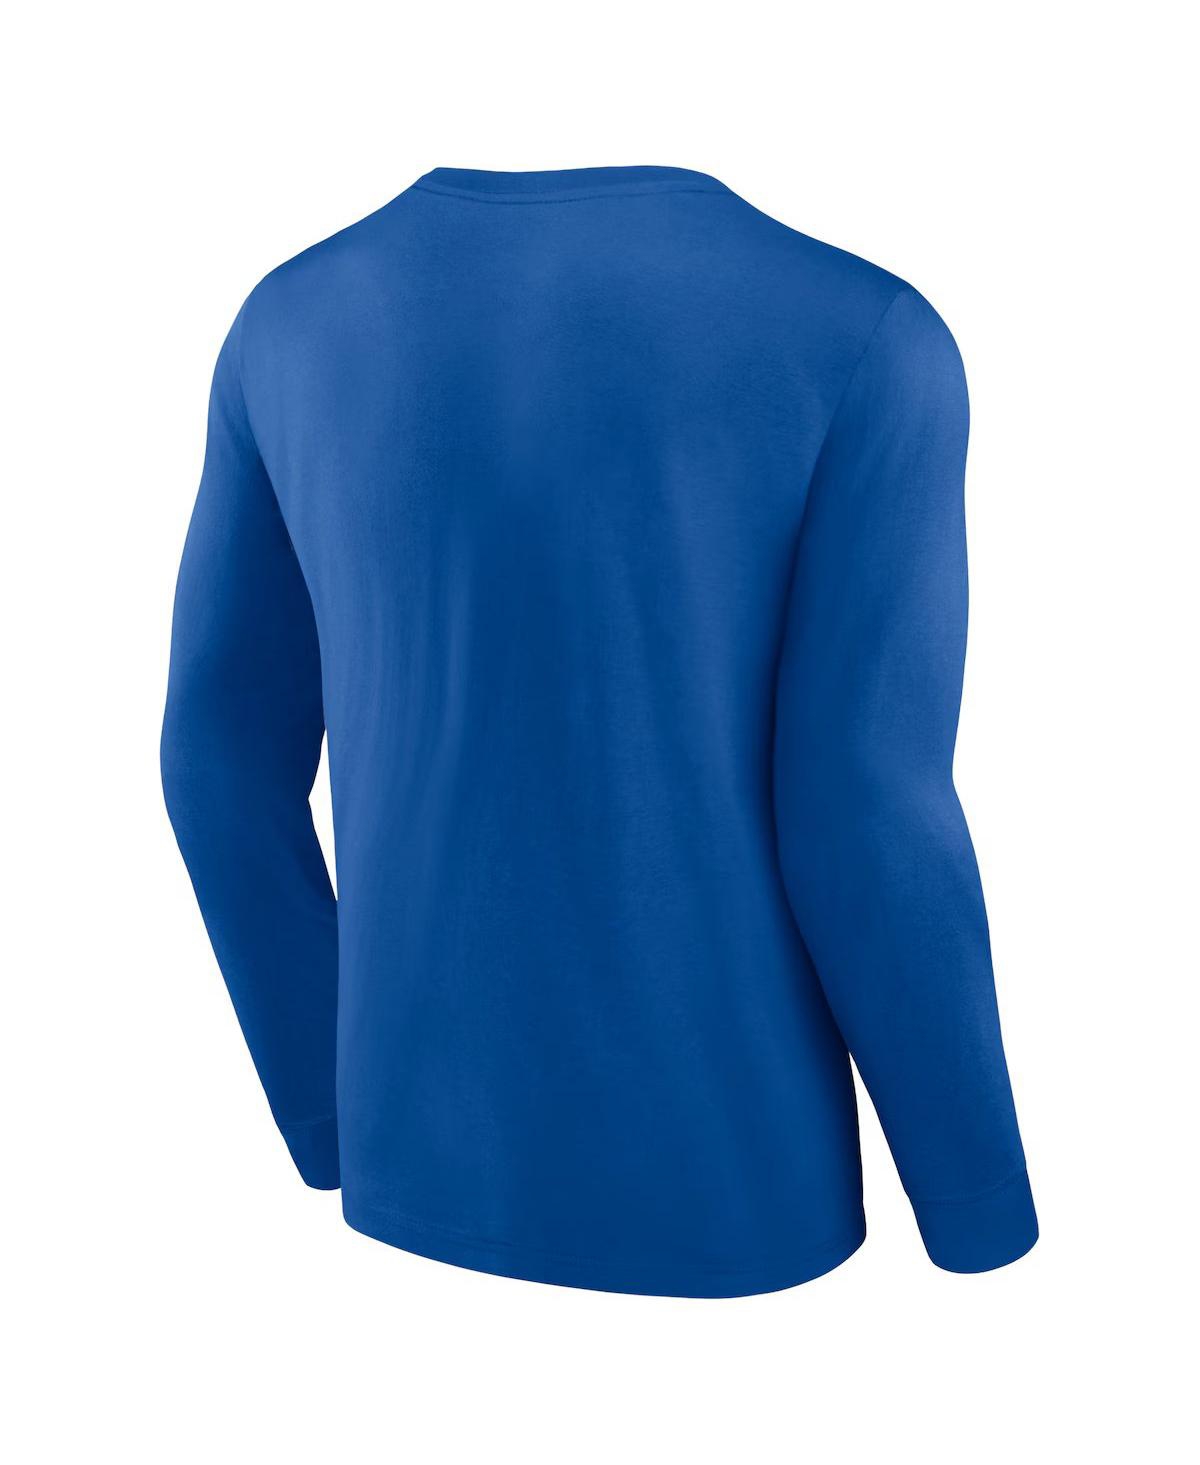 Shop Fanatics Branded Men's Blue New York Rangers Strike The Goal Long Sleeve T-shirt In Deep Royal